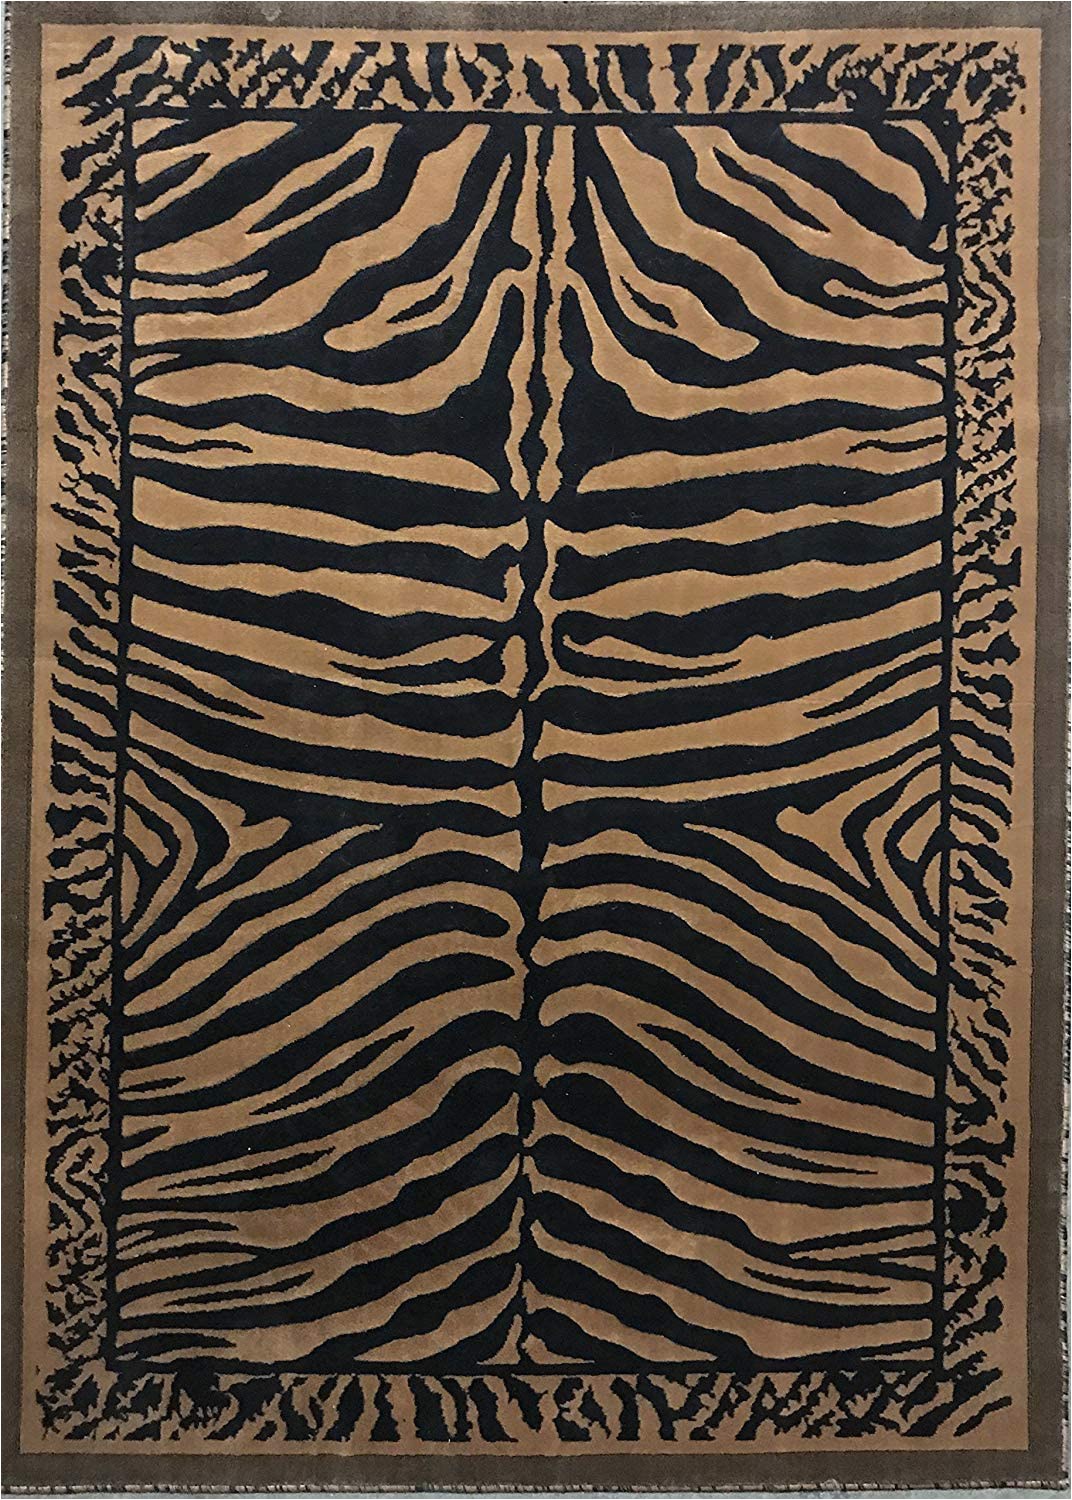 Zebra Print area Rug 8×10 Kingdom Zebra Skin Print area Rug Black & Gold Design D142 8 Feet X 10 Feet